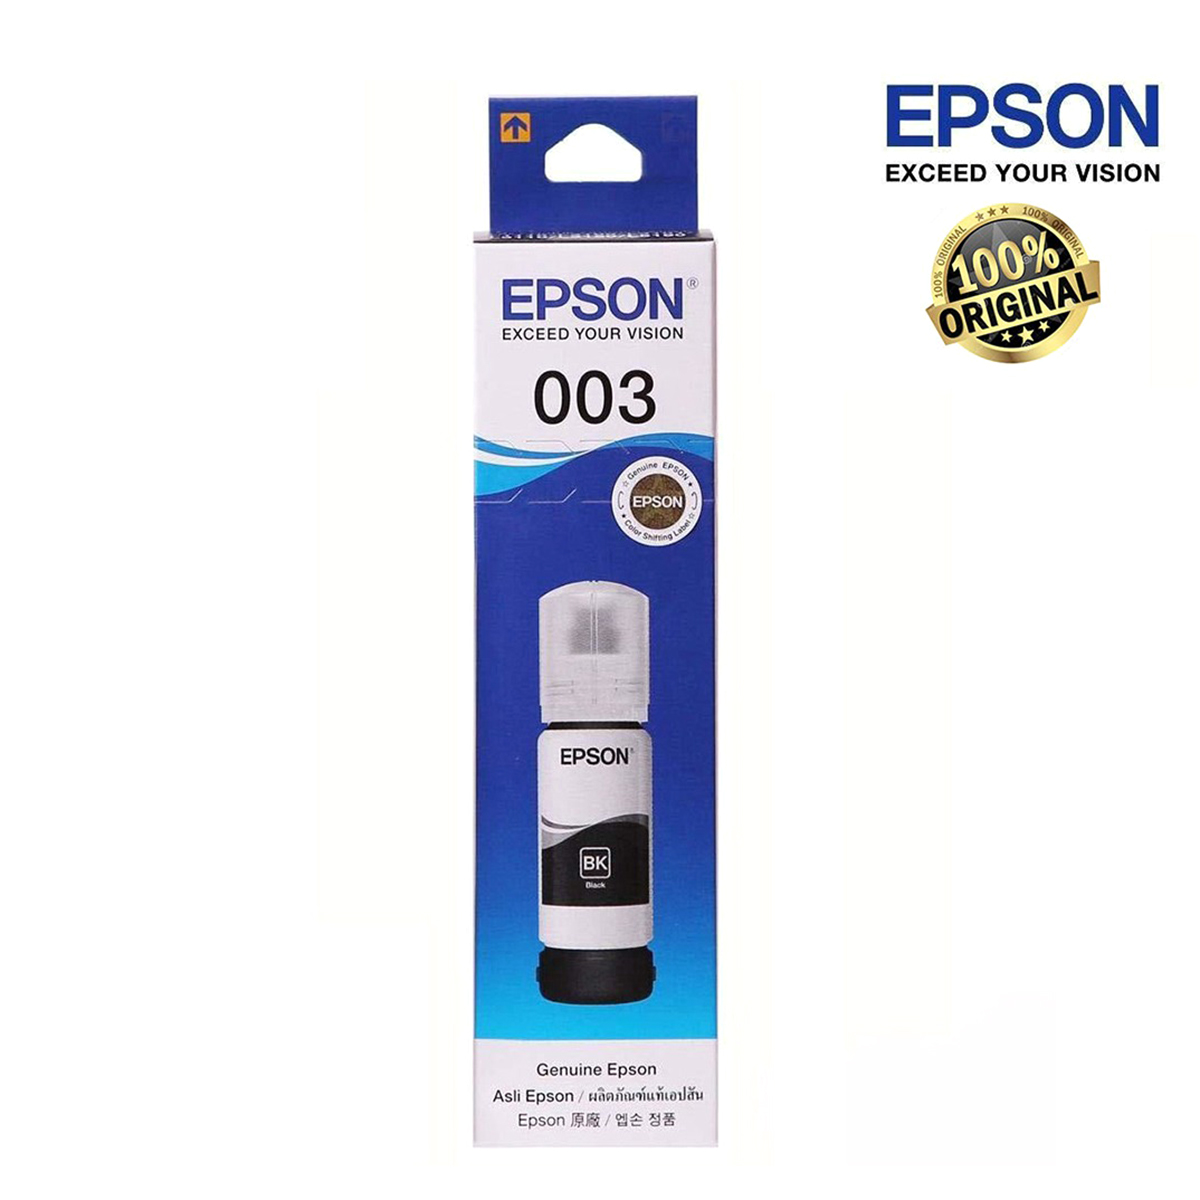 Buy Epson কালি at Best Prices Online in Bangladesh - daraz.com.bd